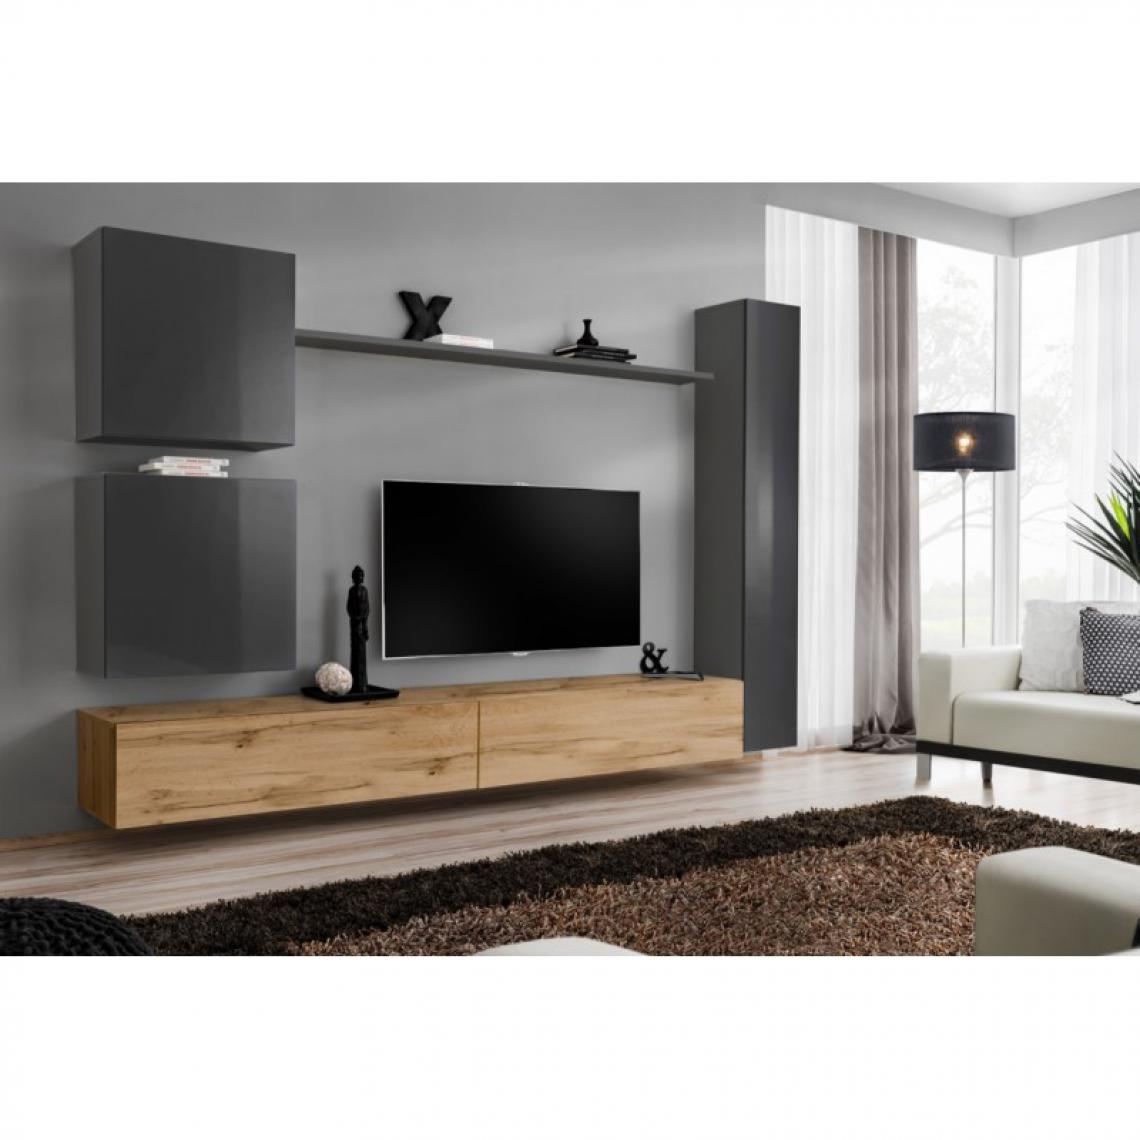 Ac-Deco - Meuble TV Mural Design Switch VIII 280cm Gris & Naturel - Meubles TV, Hi-Fi